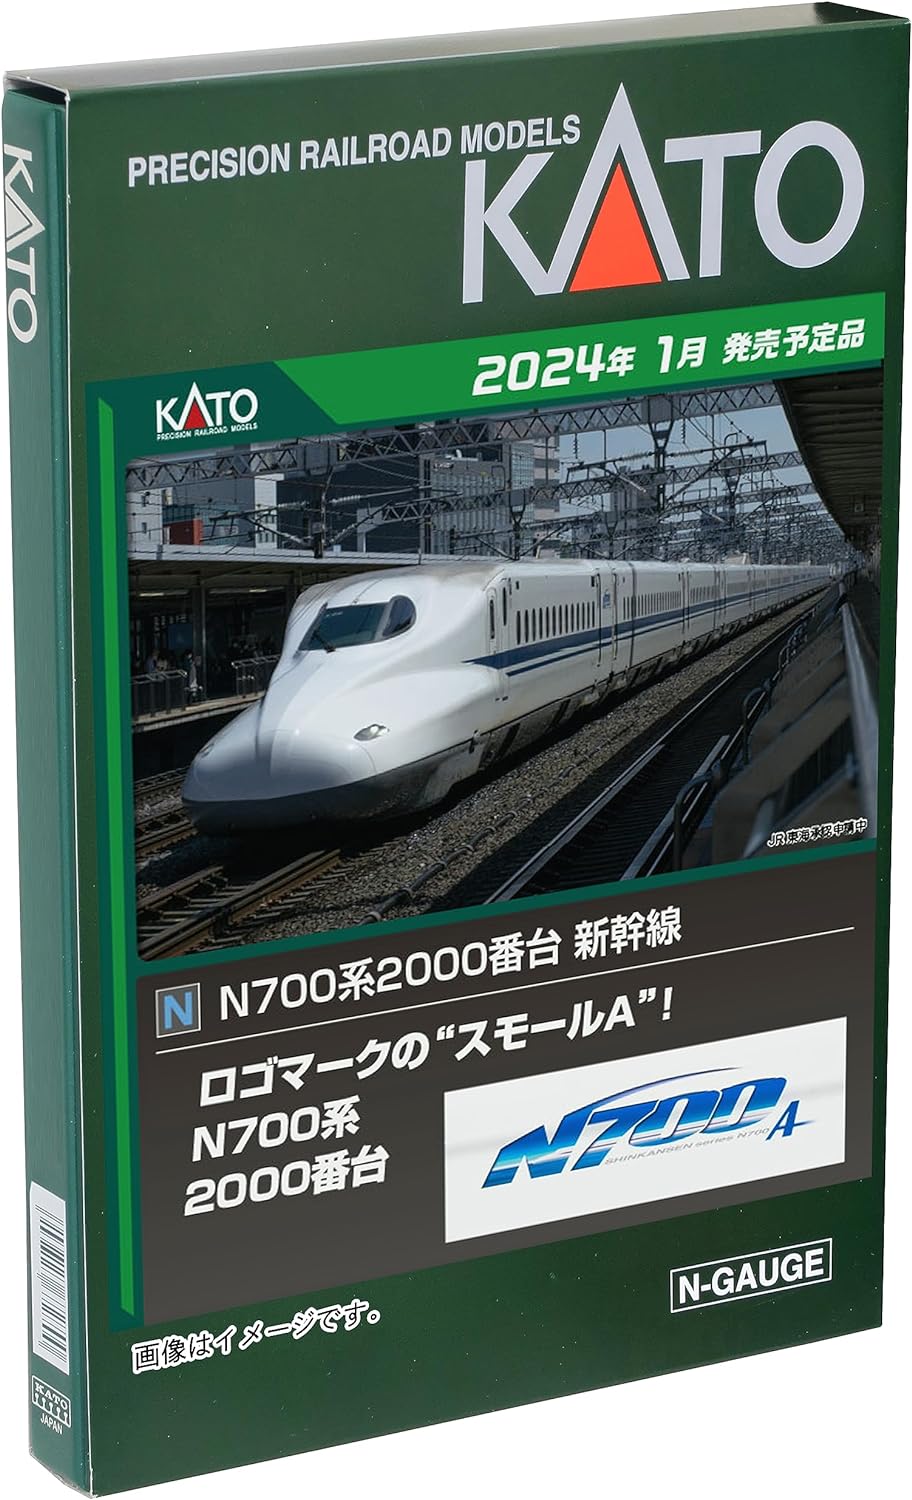 KATO N Gauge N700 Series 2000 Series 8-Car Basic Set 10-1817 Railway Model Train - BanzaiHobby